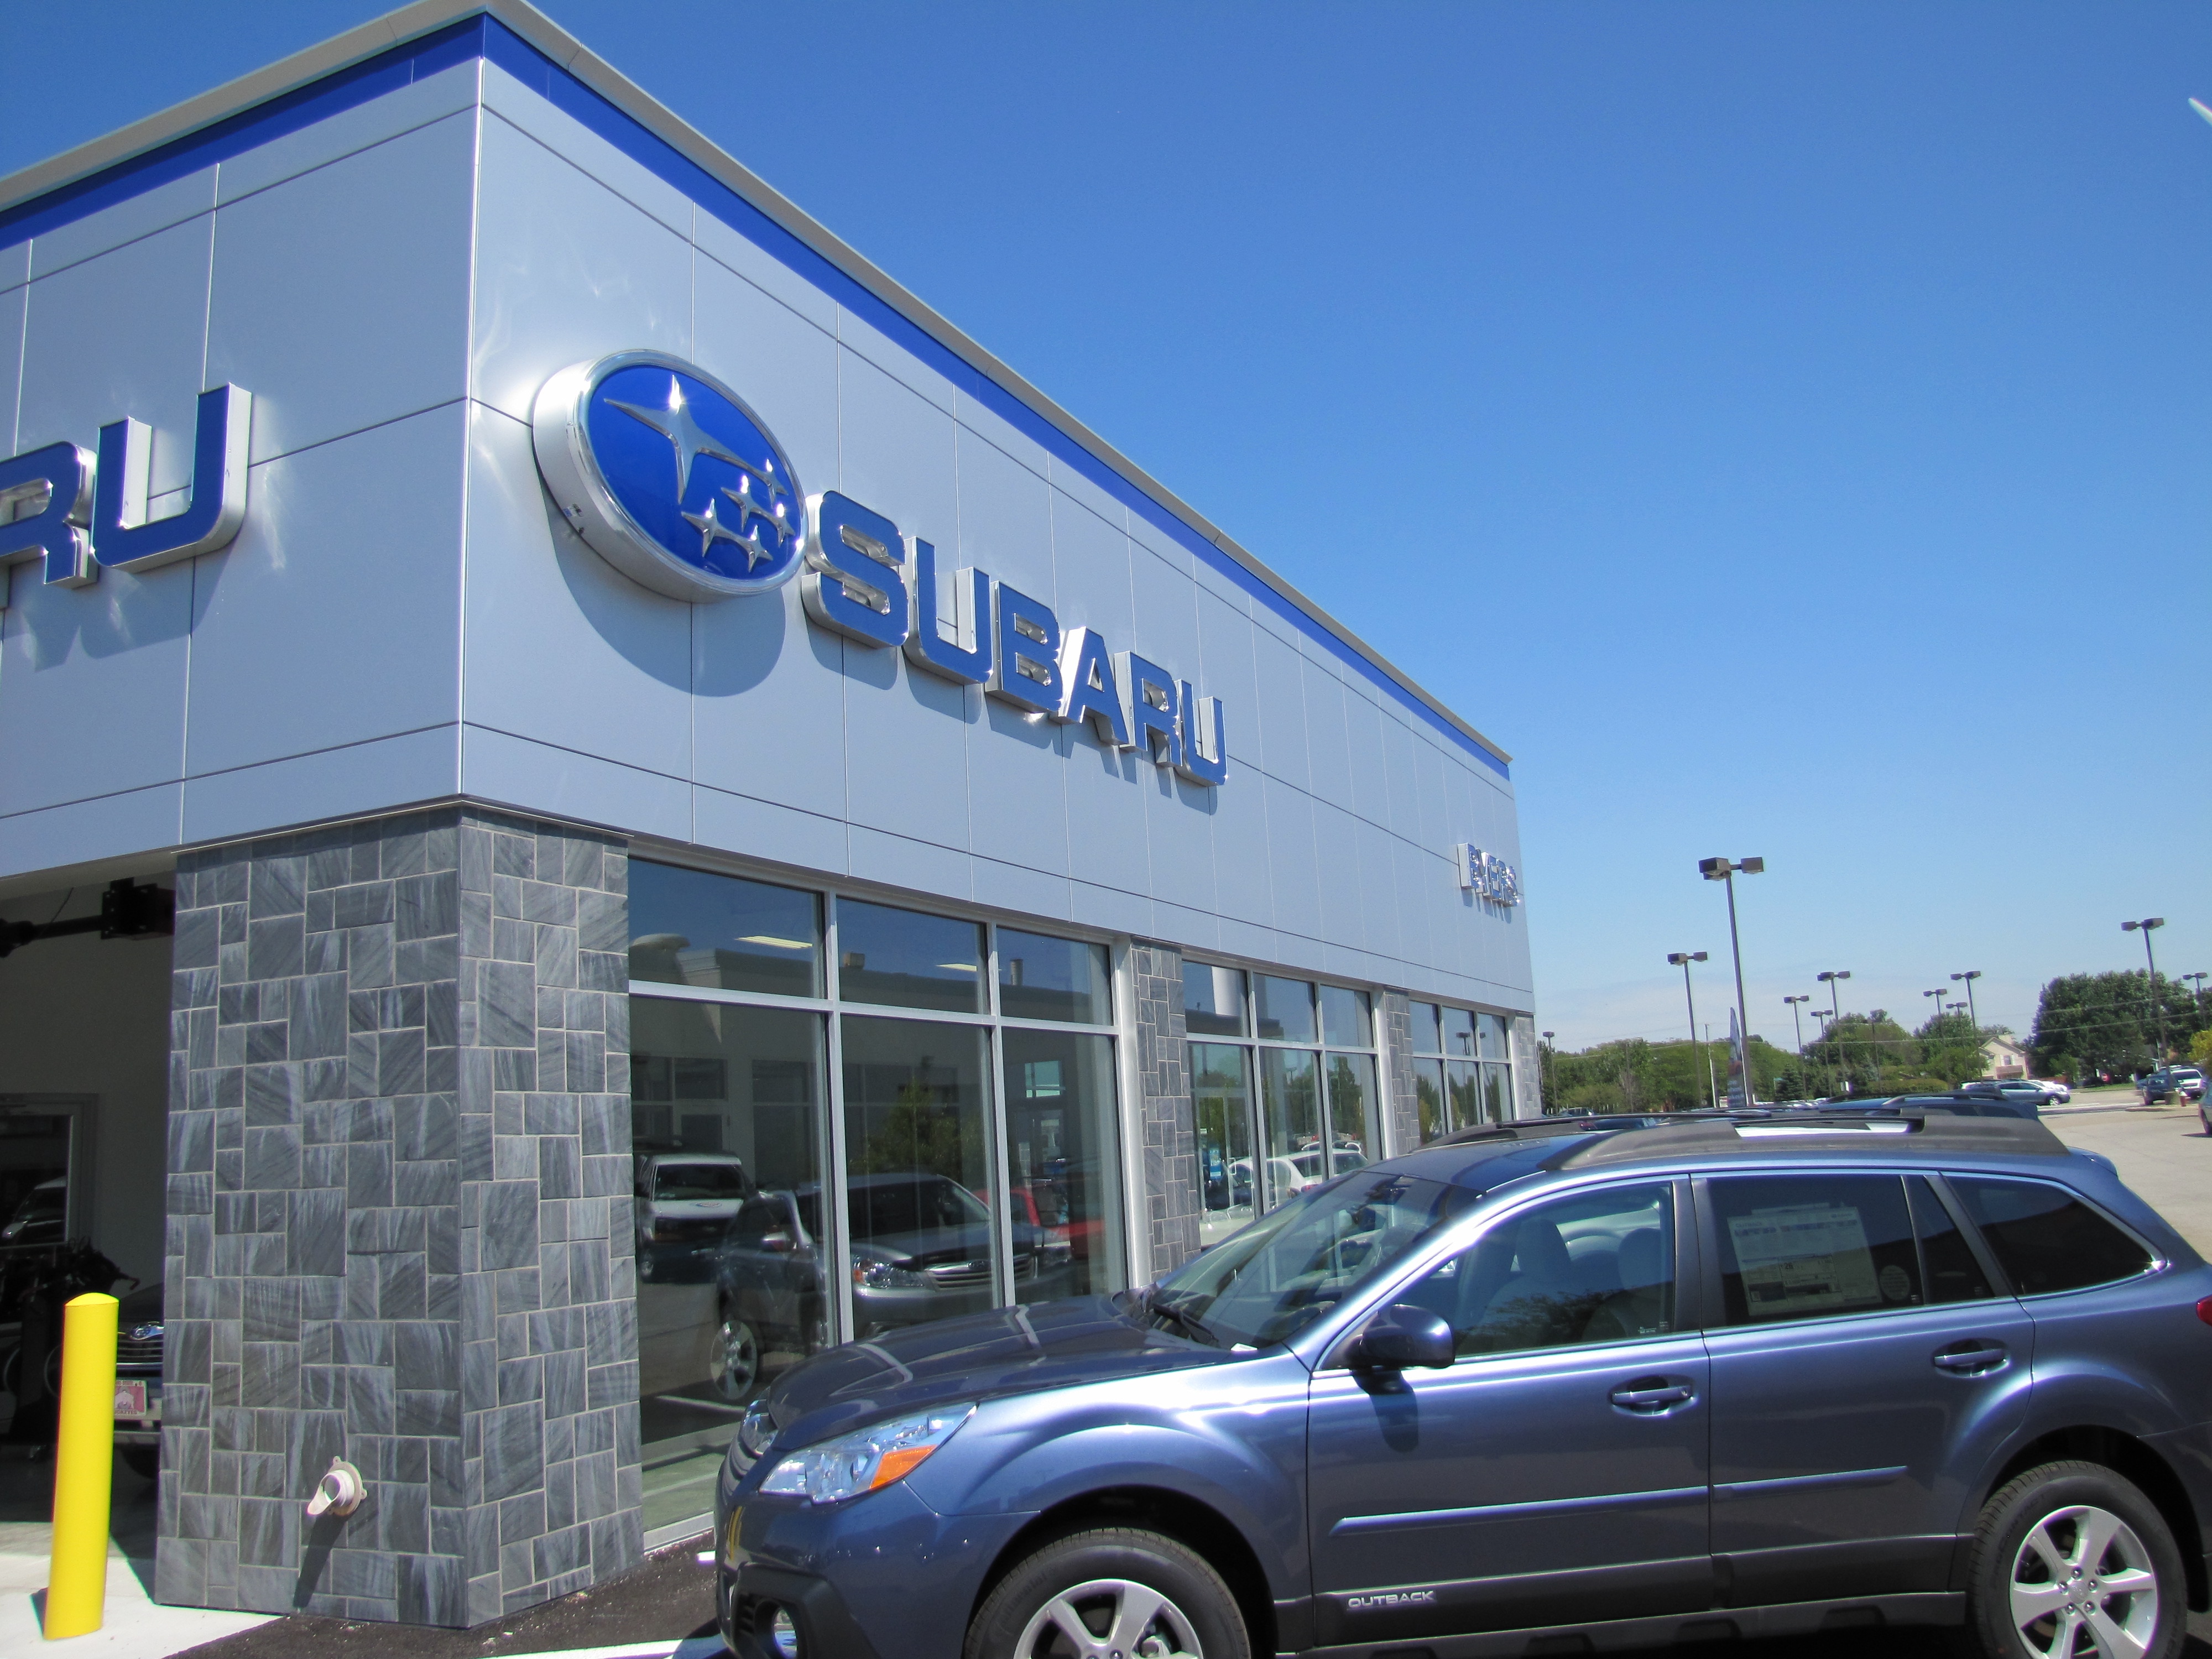 Byers Subaru Dublin Storefront